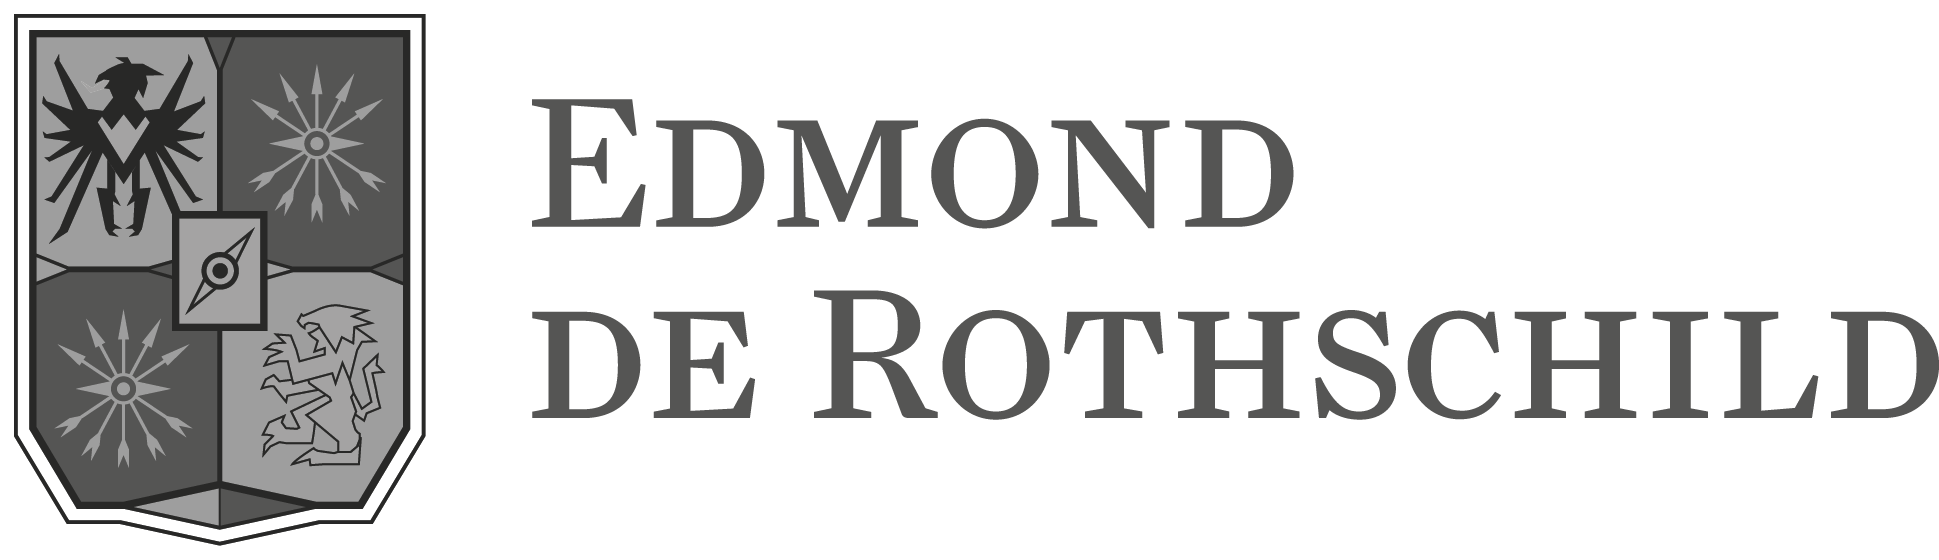 logo Edmond de Rothschild